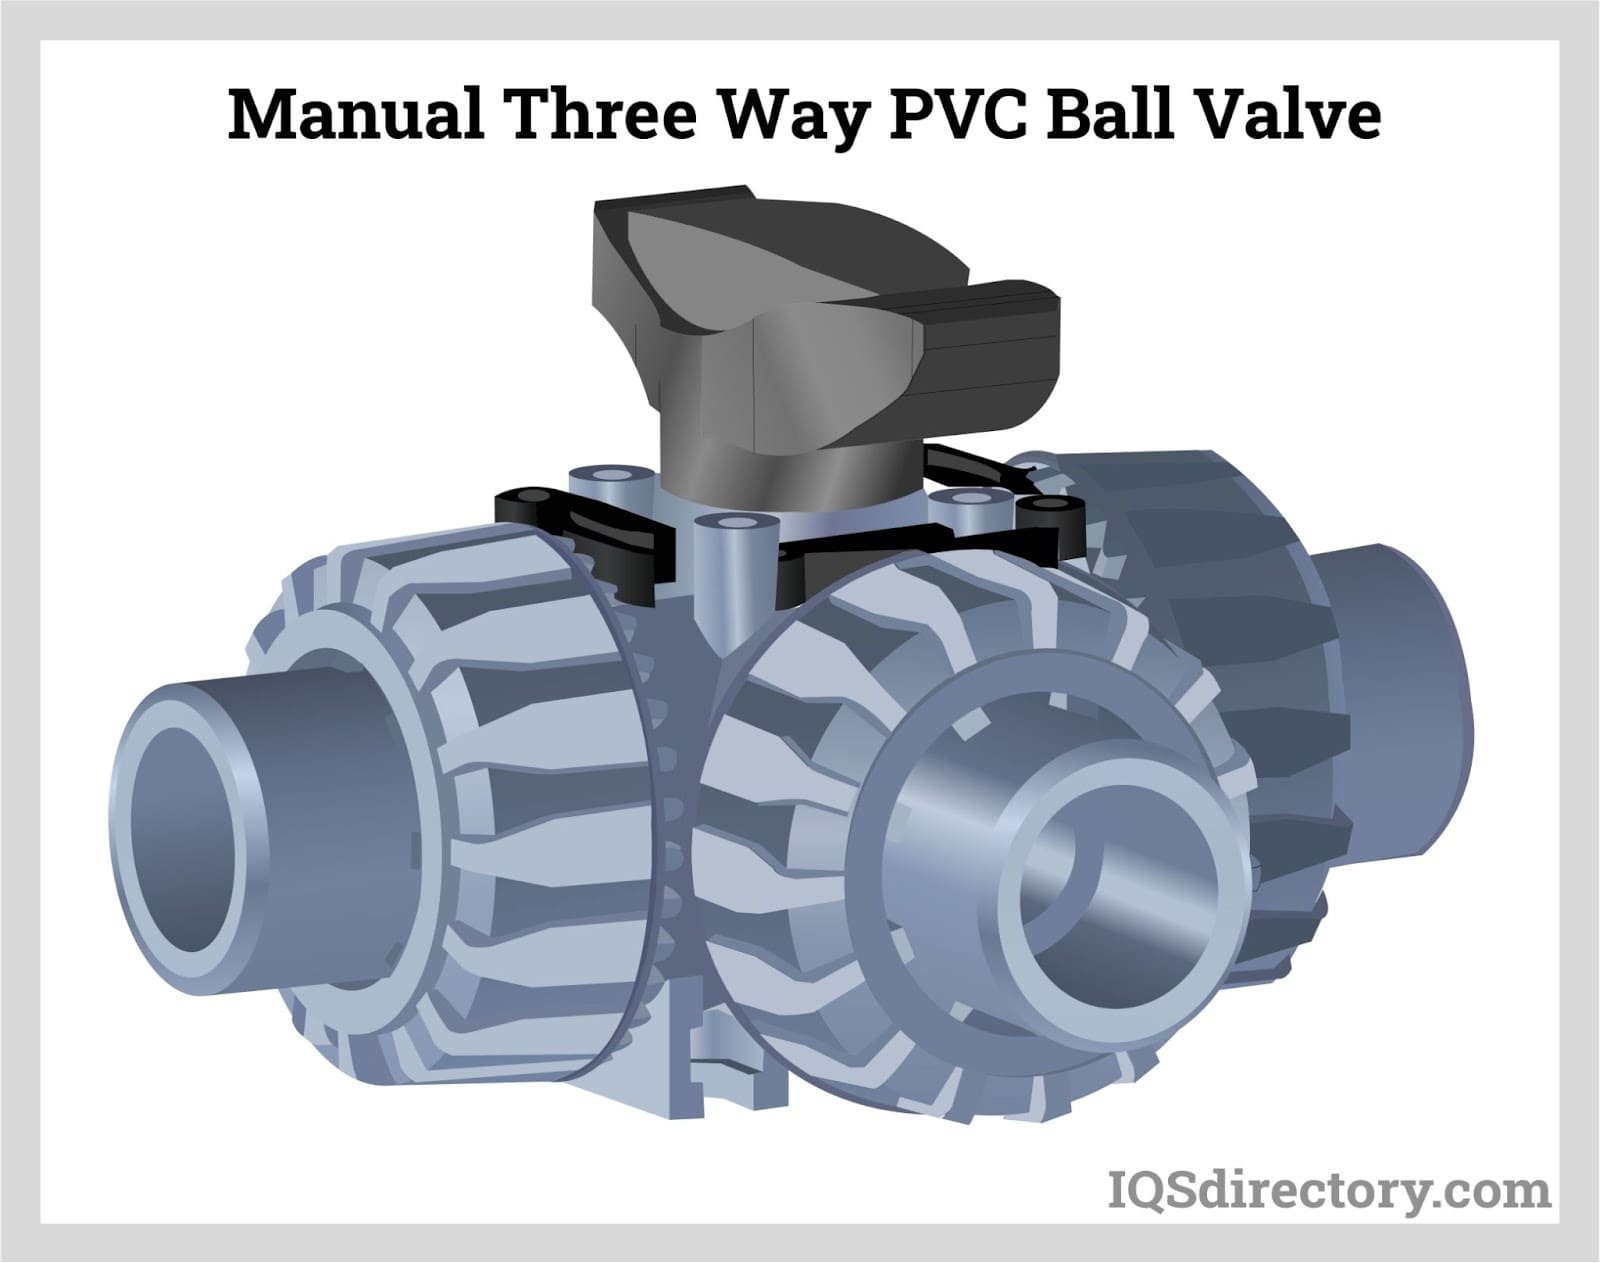 Manual Three Way PVC Ball Valve